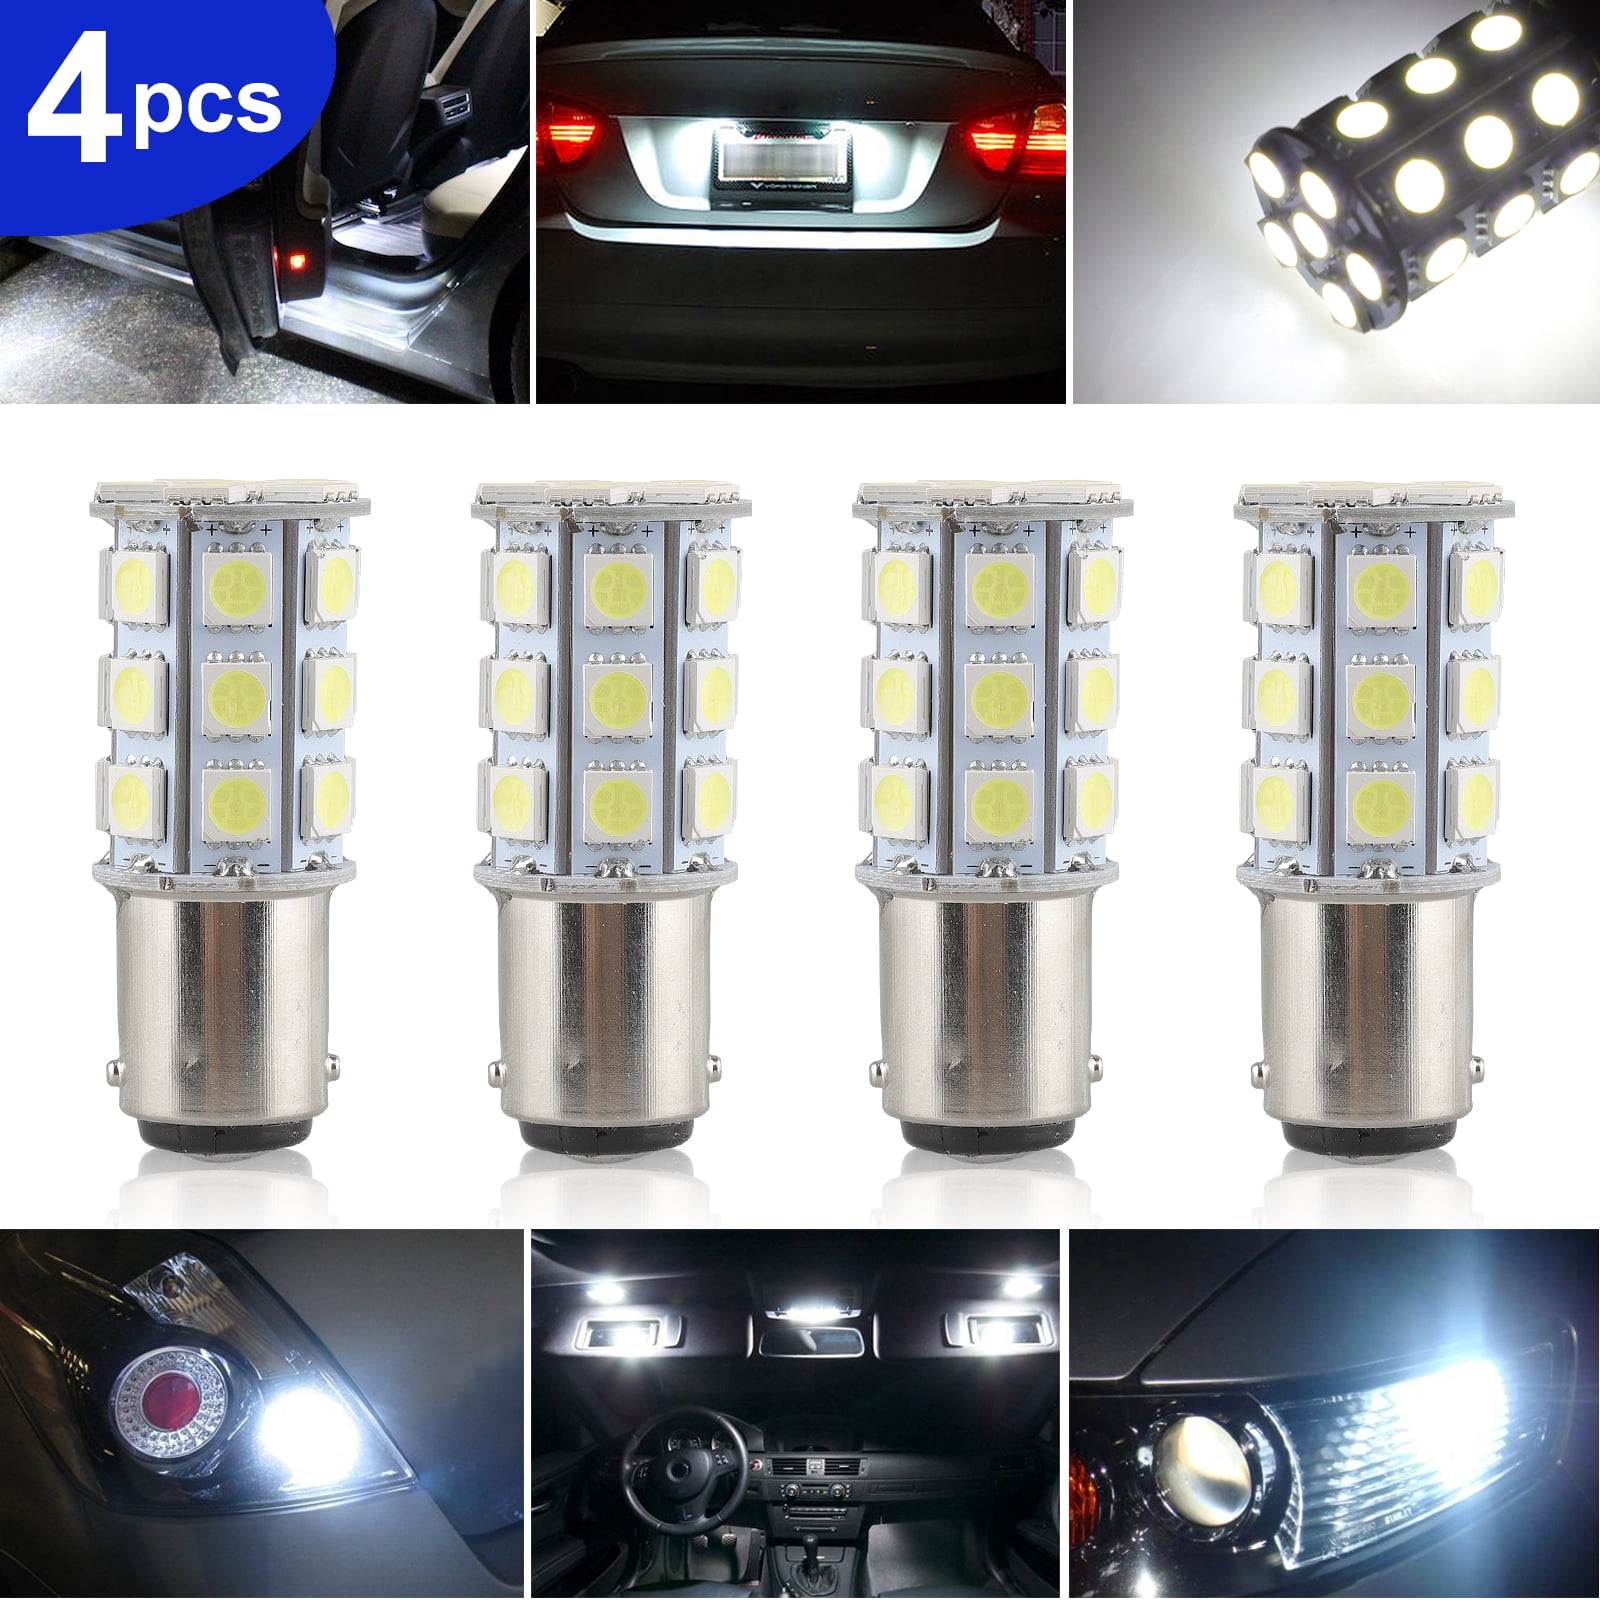 Lightbulb LED Automotive Wedge, Pair, T10/194 12VDC 4W White 6000K